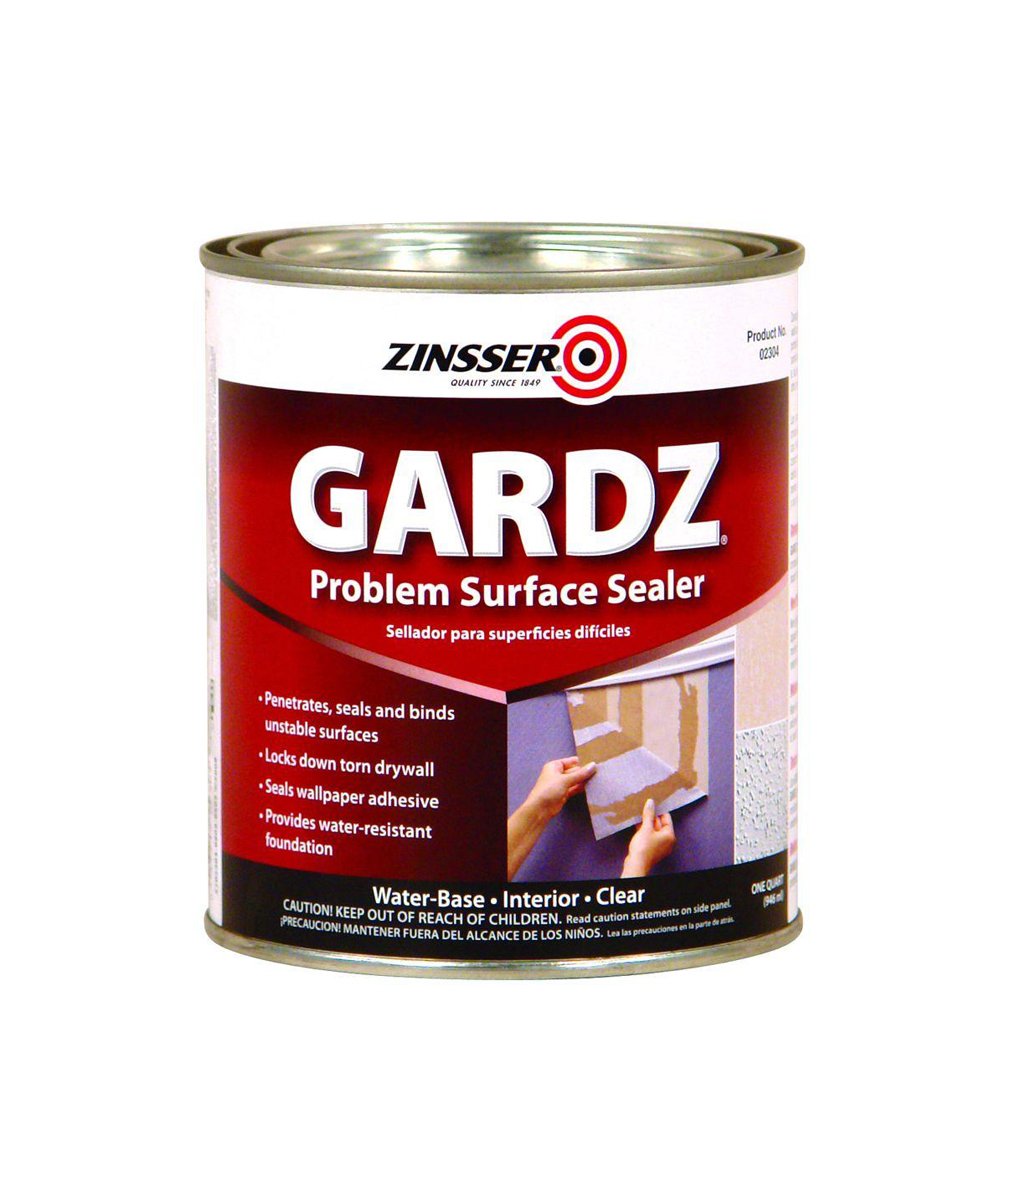 Gardz Drywall Sealer